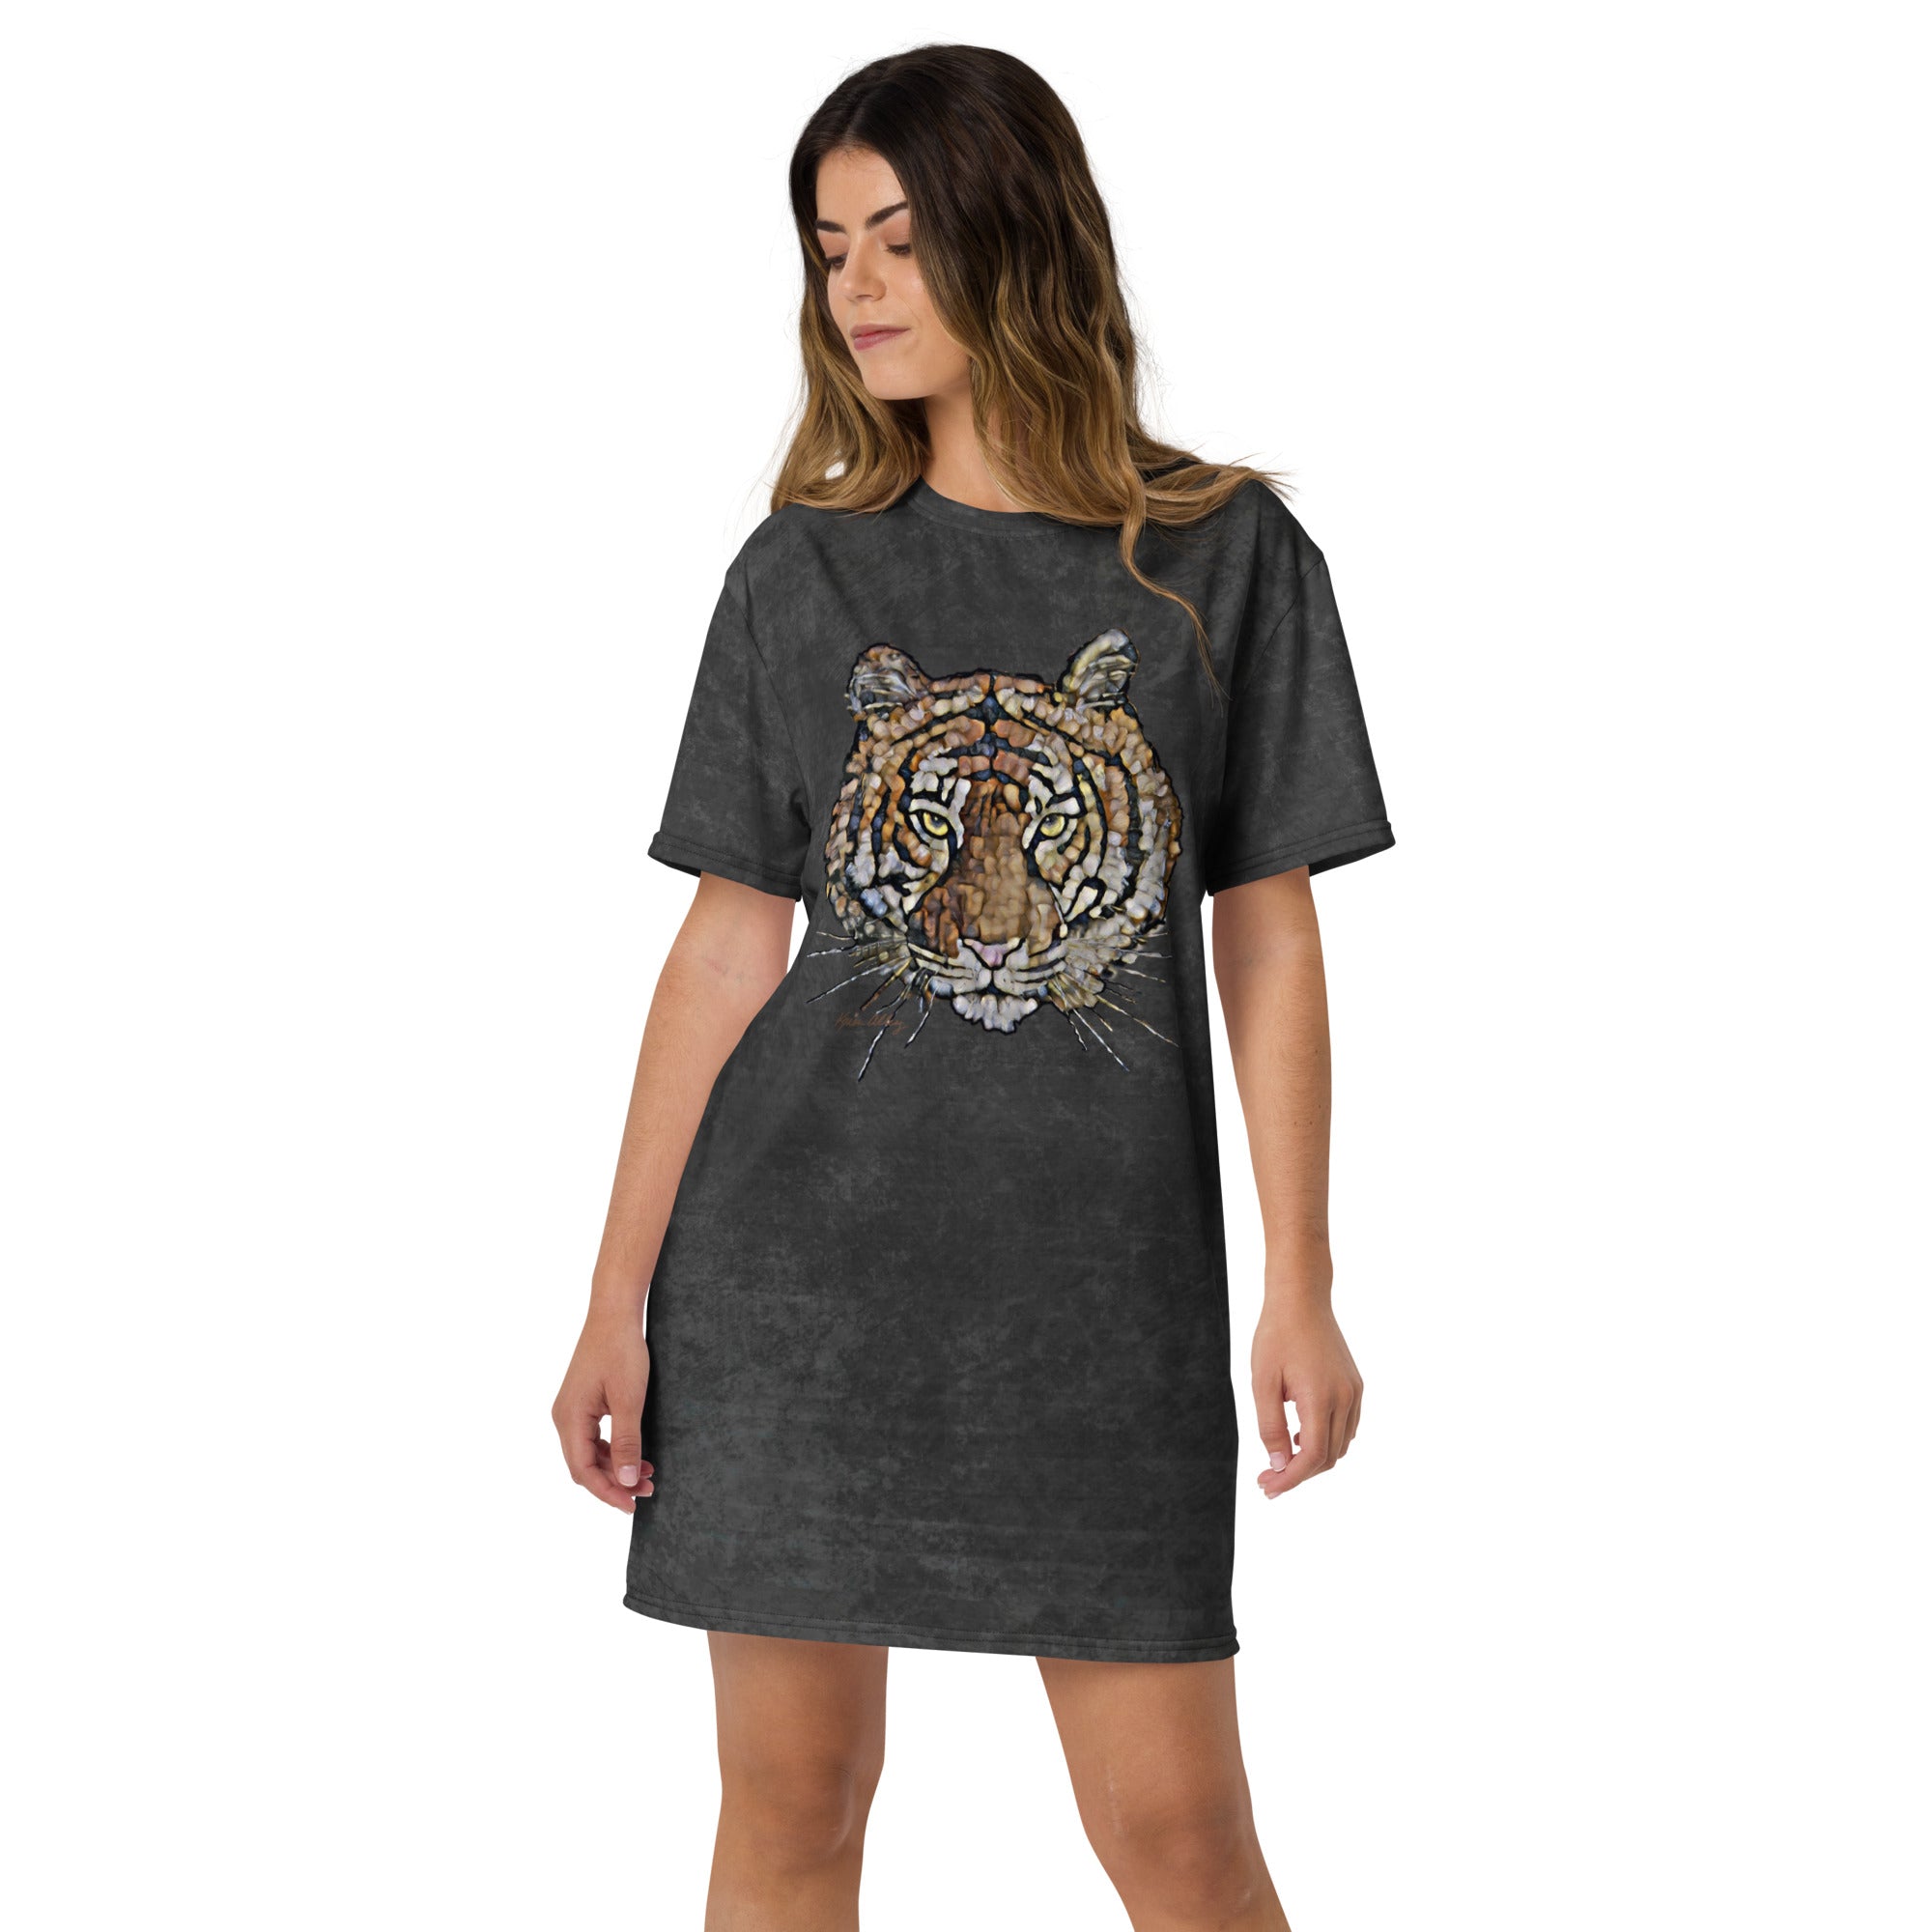 Mosaic Tiger Distressed AOP T-shirt dress